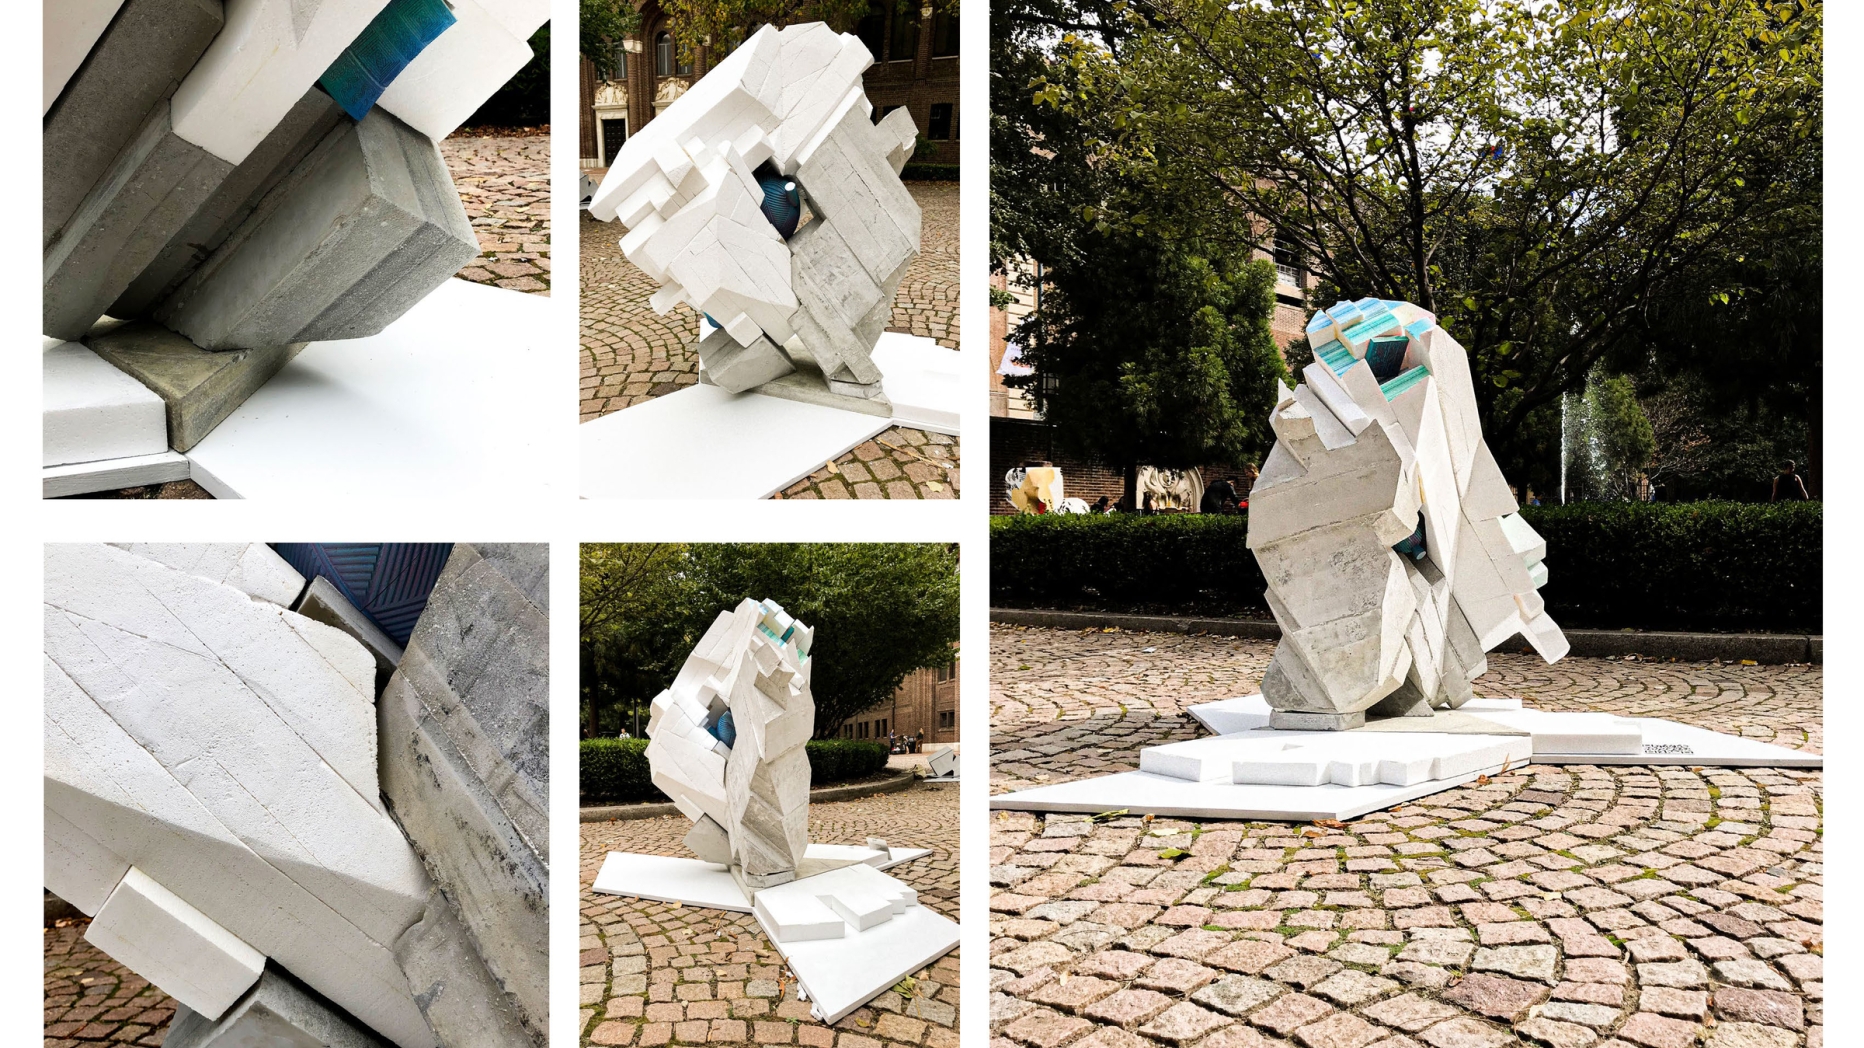 Sculpture installed on Penn campus